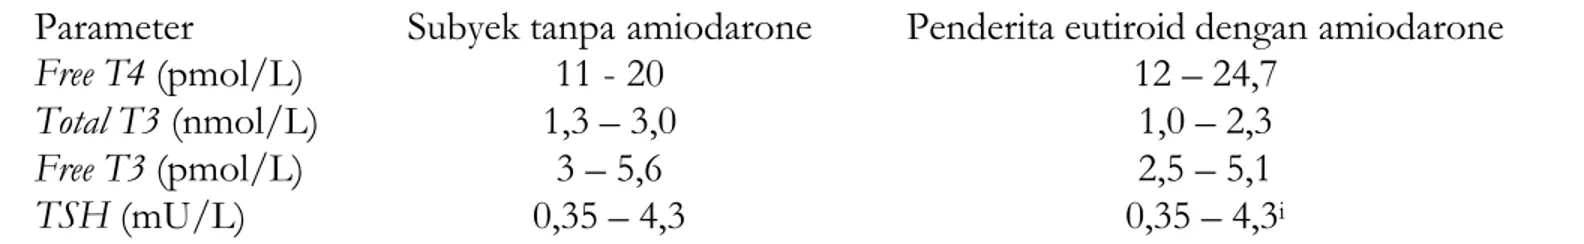 Tabel 1. Nilai referensi fungsi tiroid pada subyek eutiroid tanpa amiodarone dan pasien eutiroid yang mendapat amiodarone jangka panjang